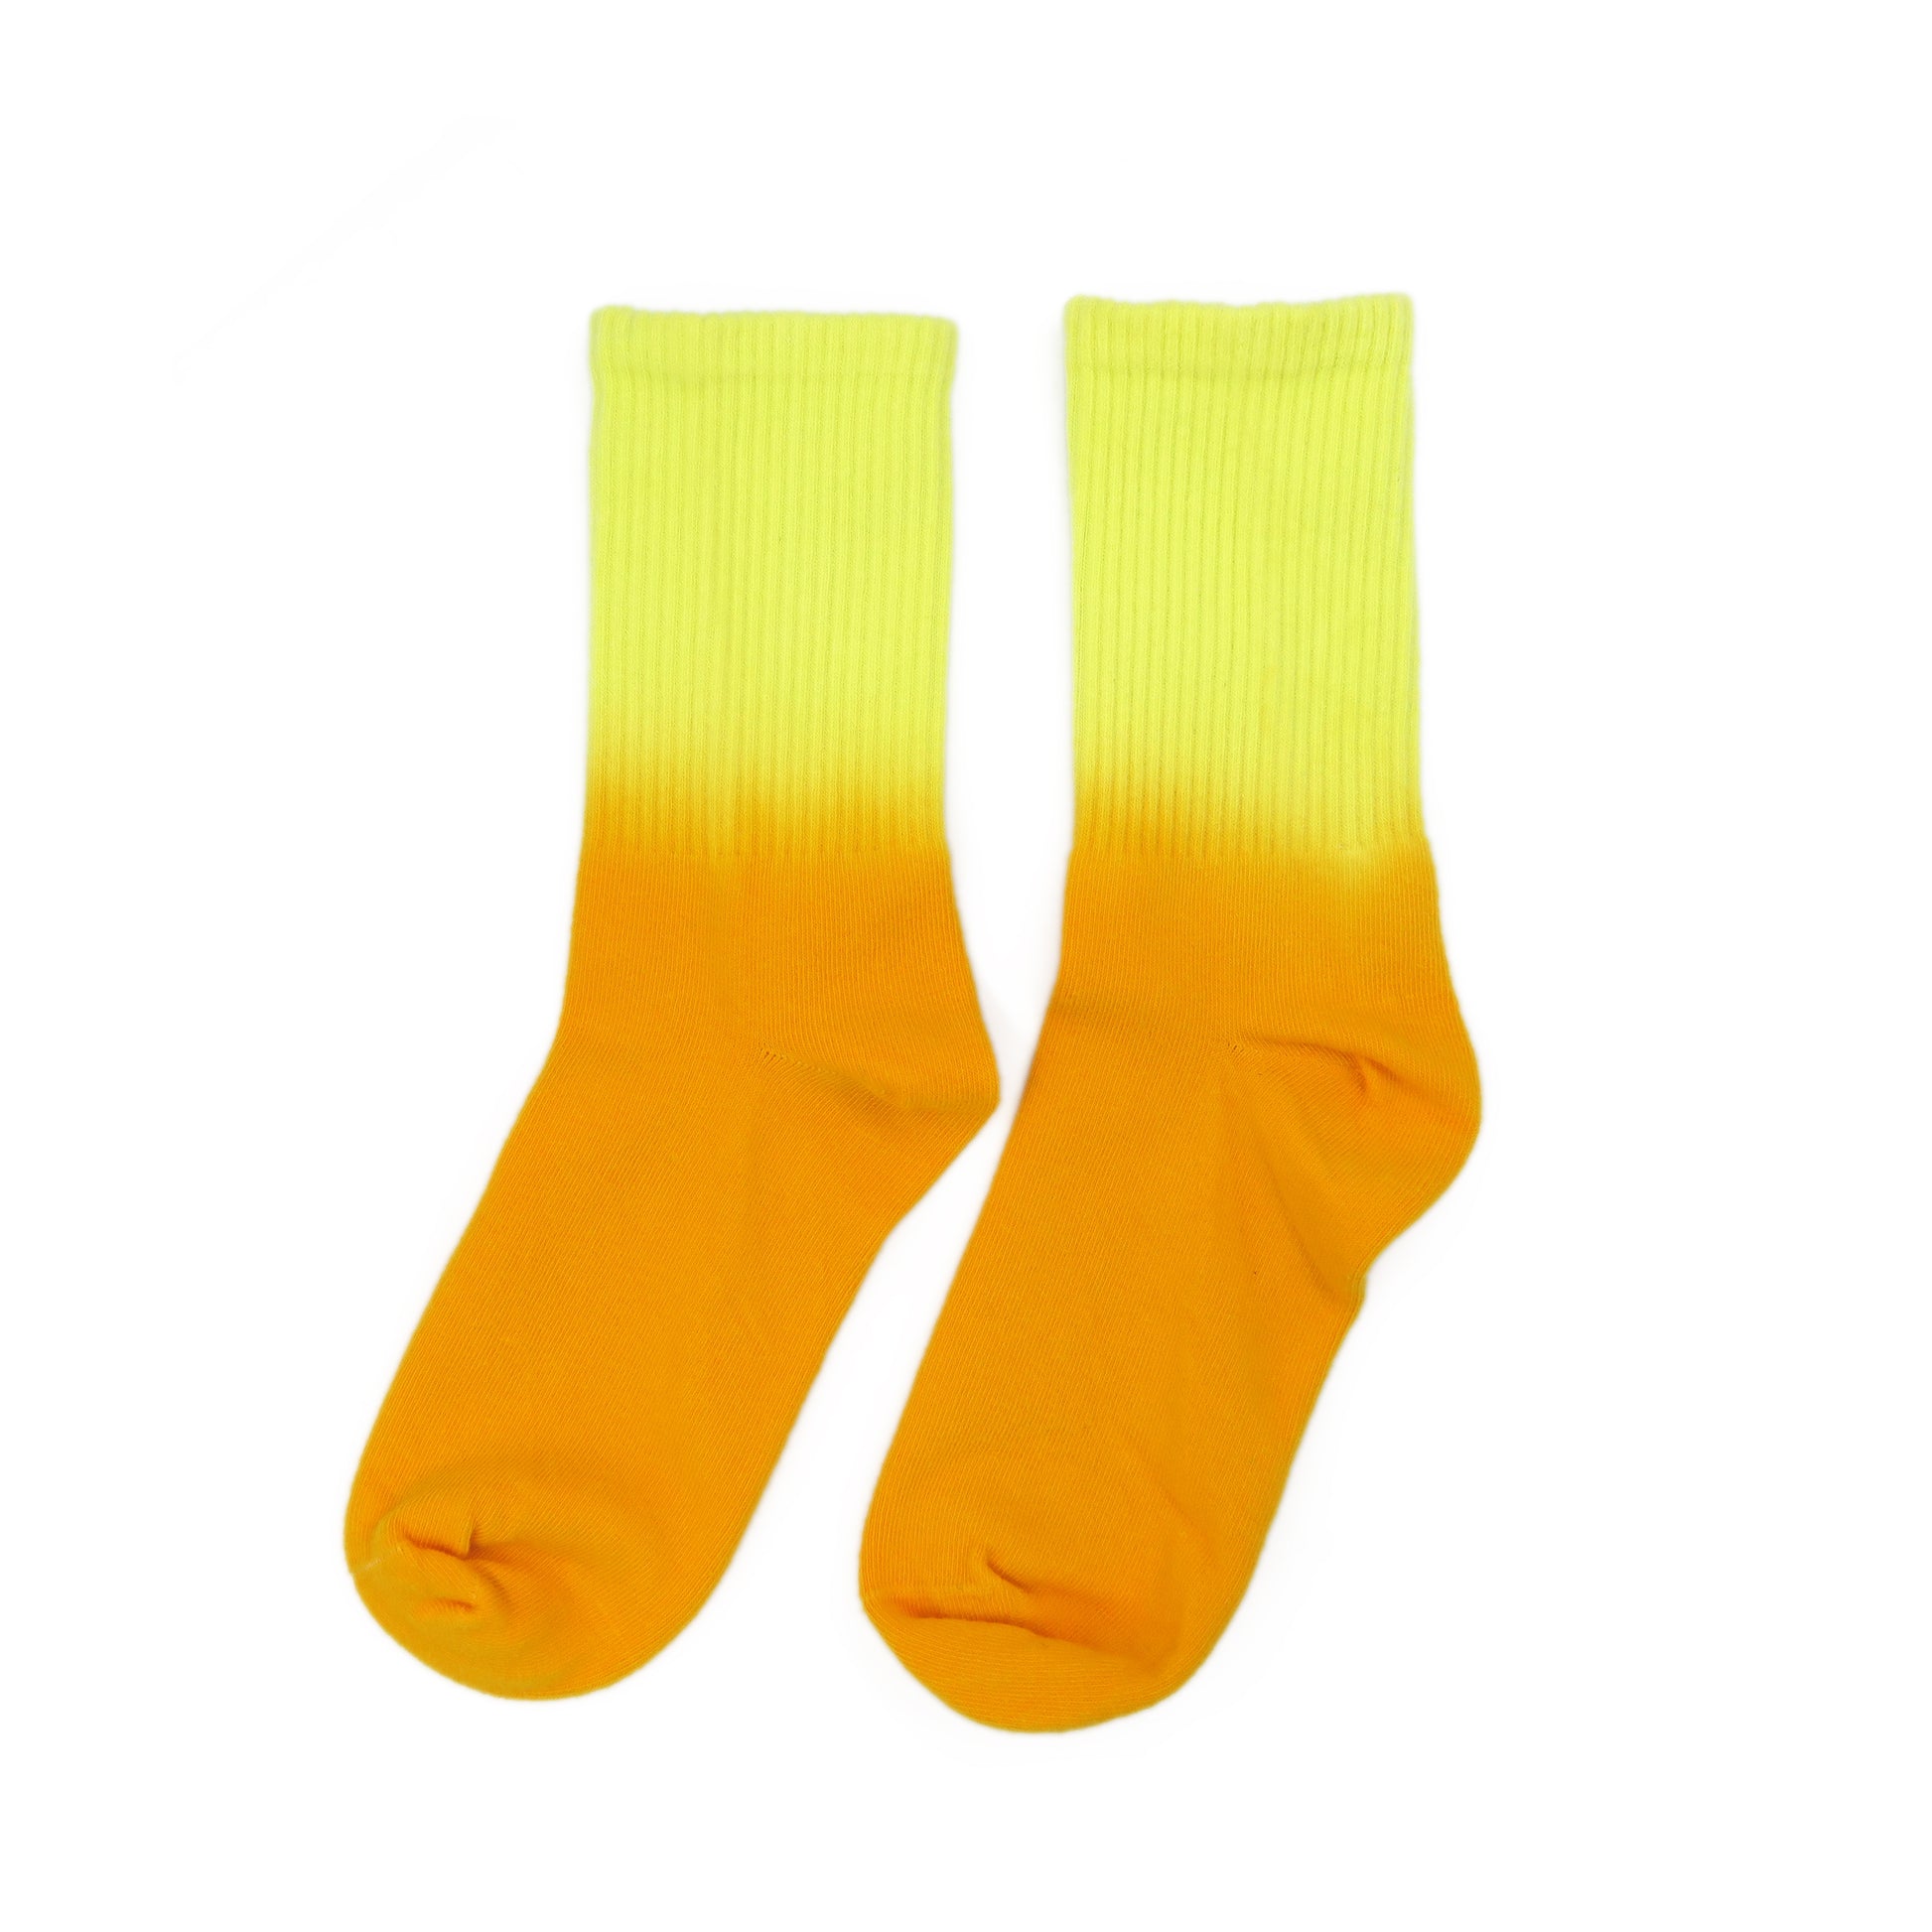 Tie Dye sock - Neon Yellow & Orange - Comfysocks